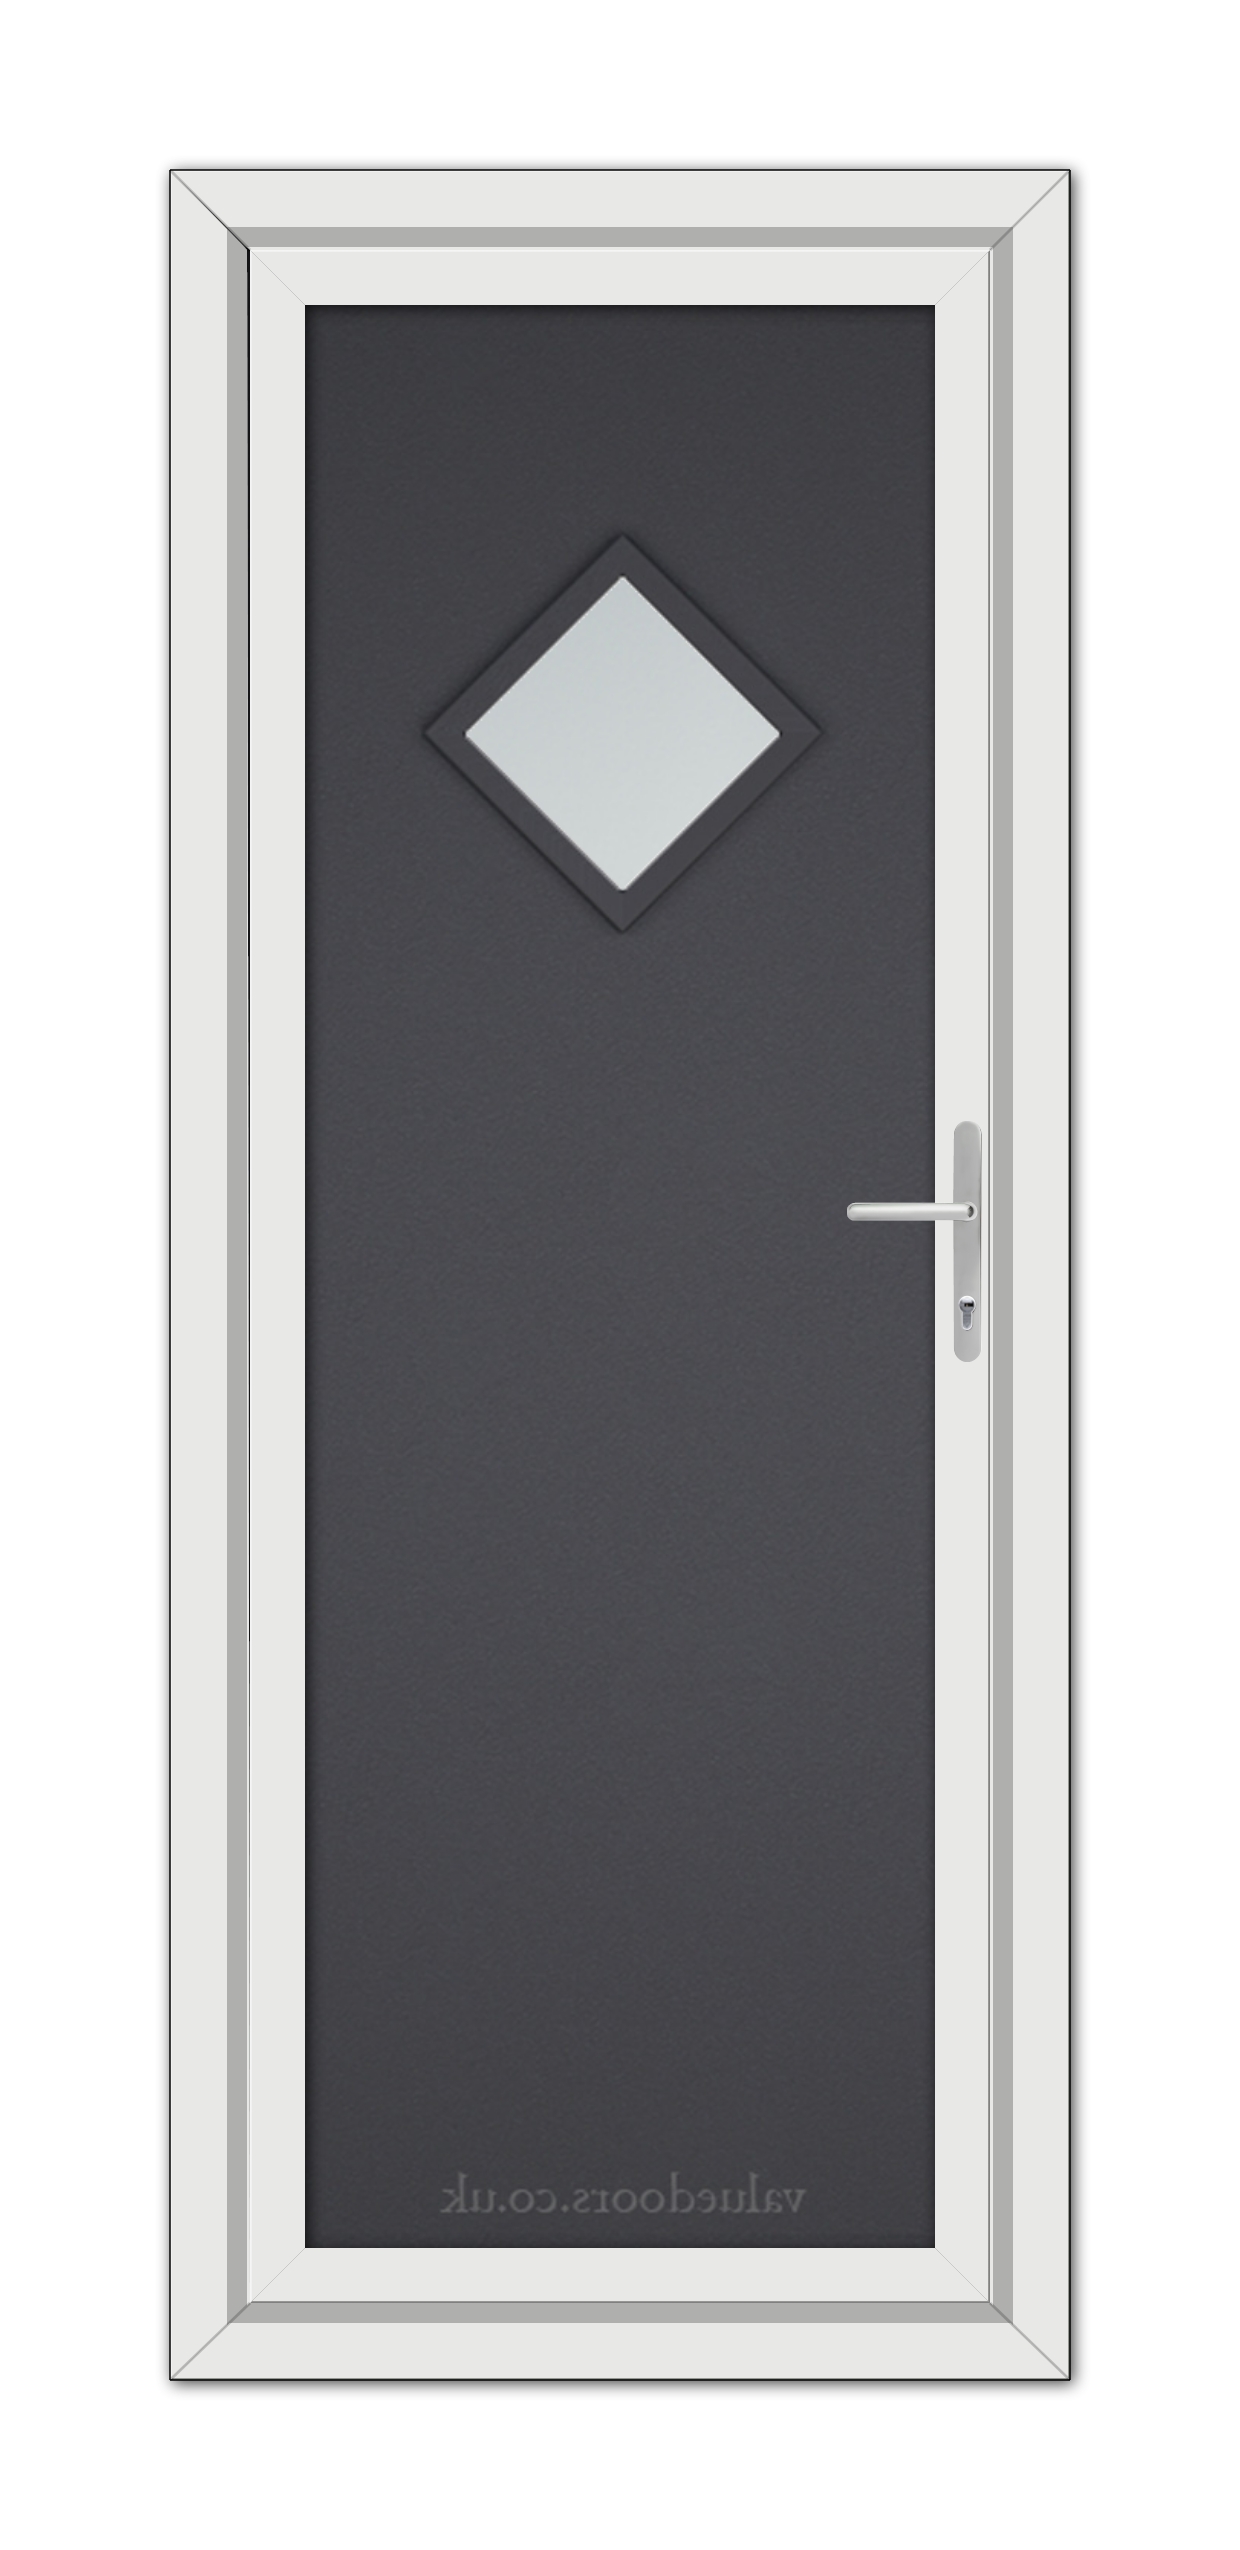 Grey Grained Modern 5131 uPVC door frame enclosing a Grey Grained Modern 5131 uPVC door with a diamond-shaped window and a metal handle, displayed vertically.